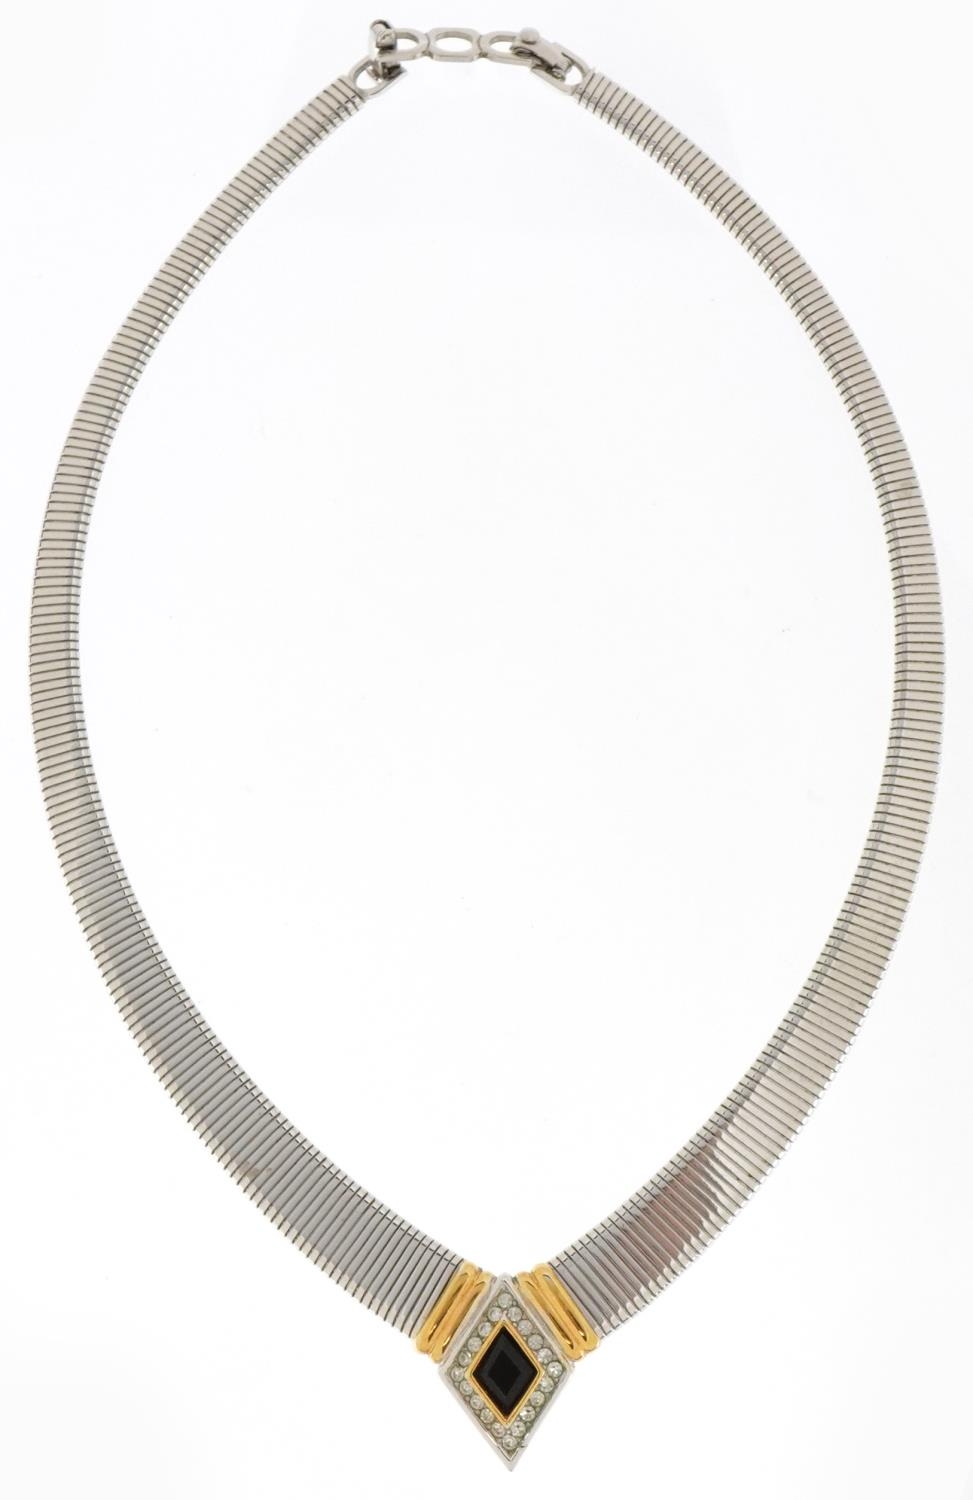 Christian Dior, vintage necklace, 40cm in length, 30.5g - Image 2 of 4